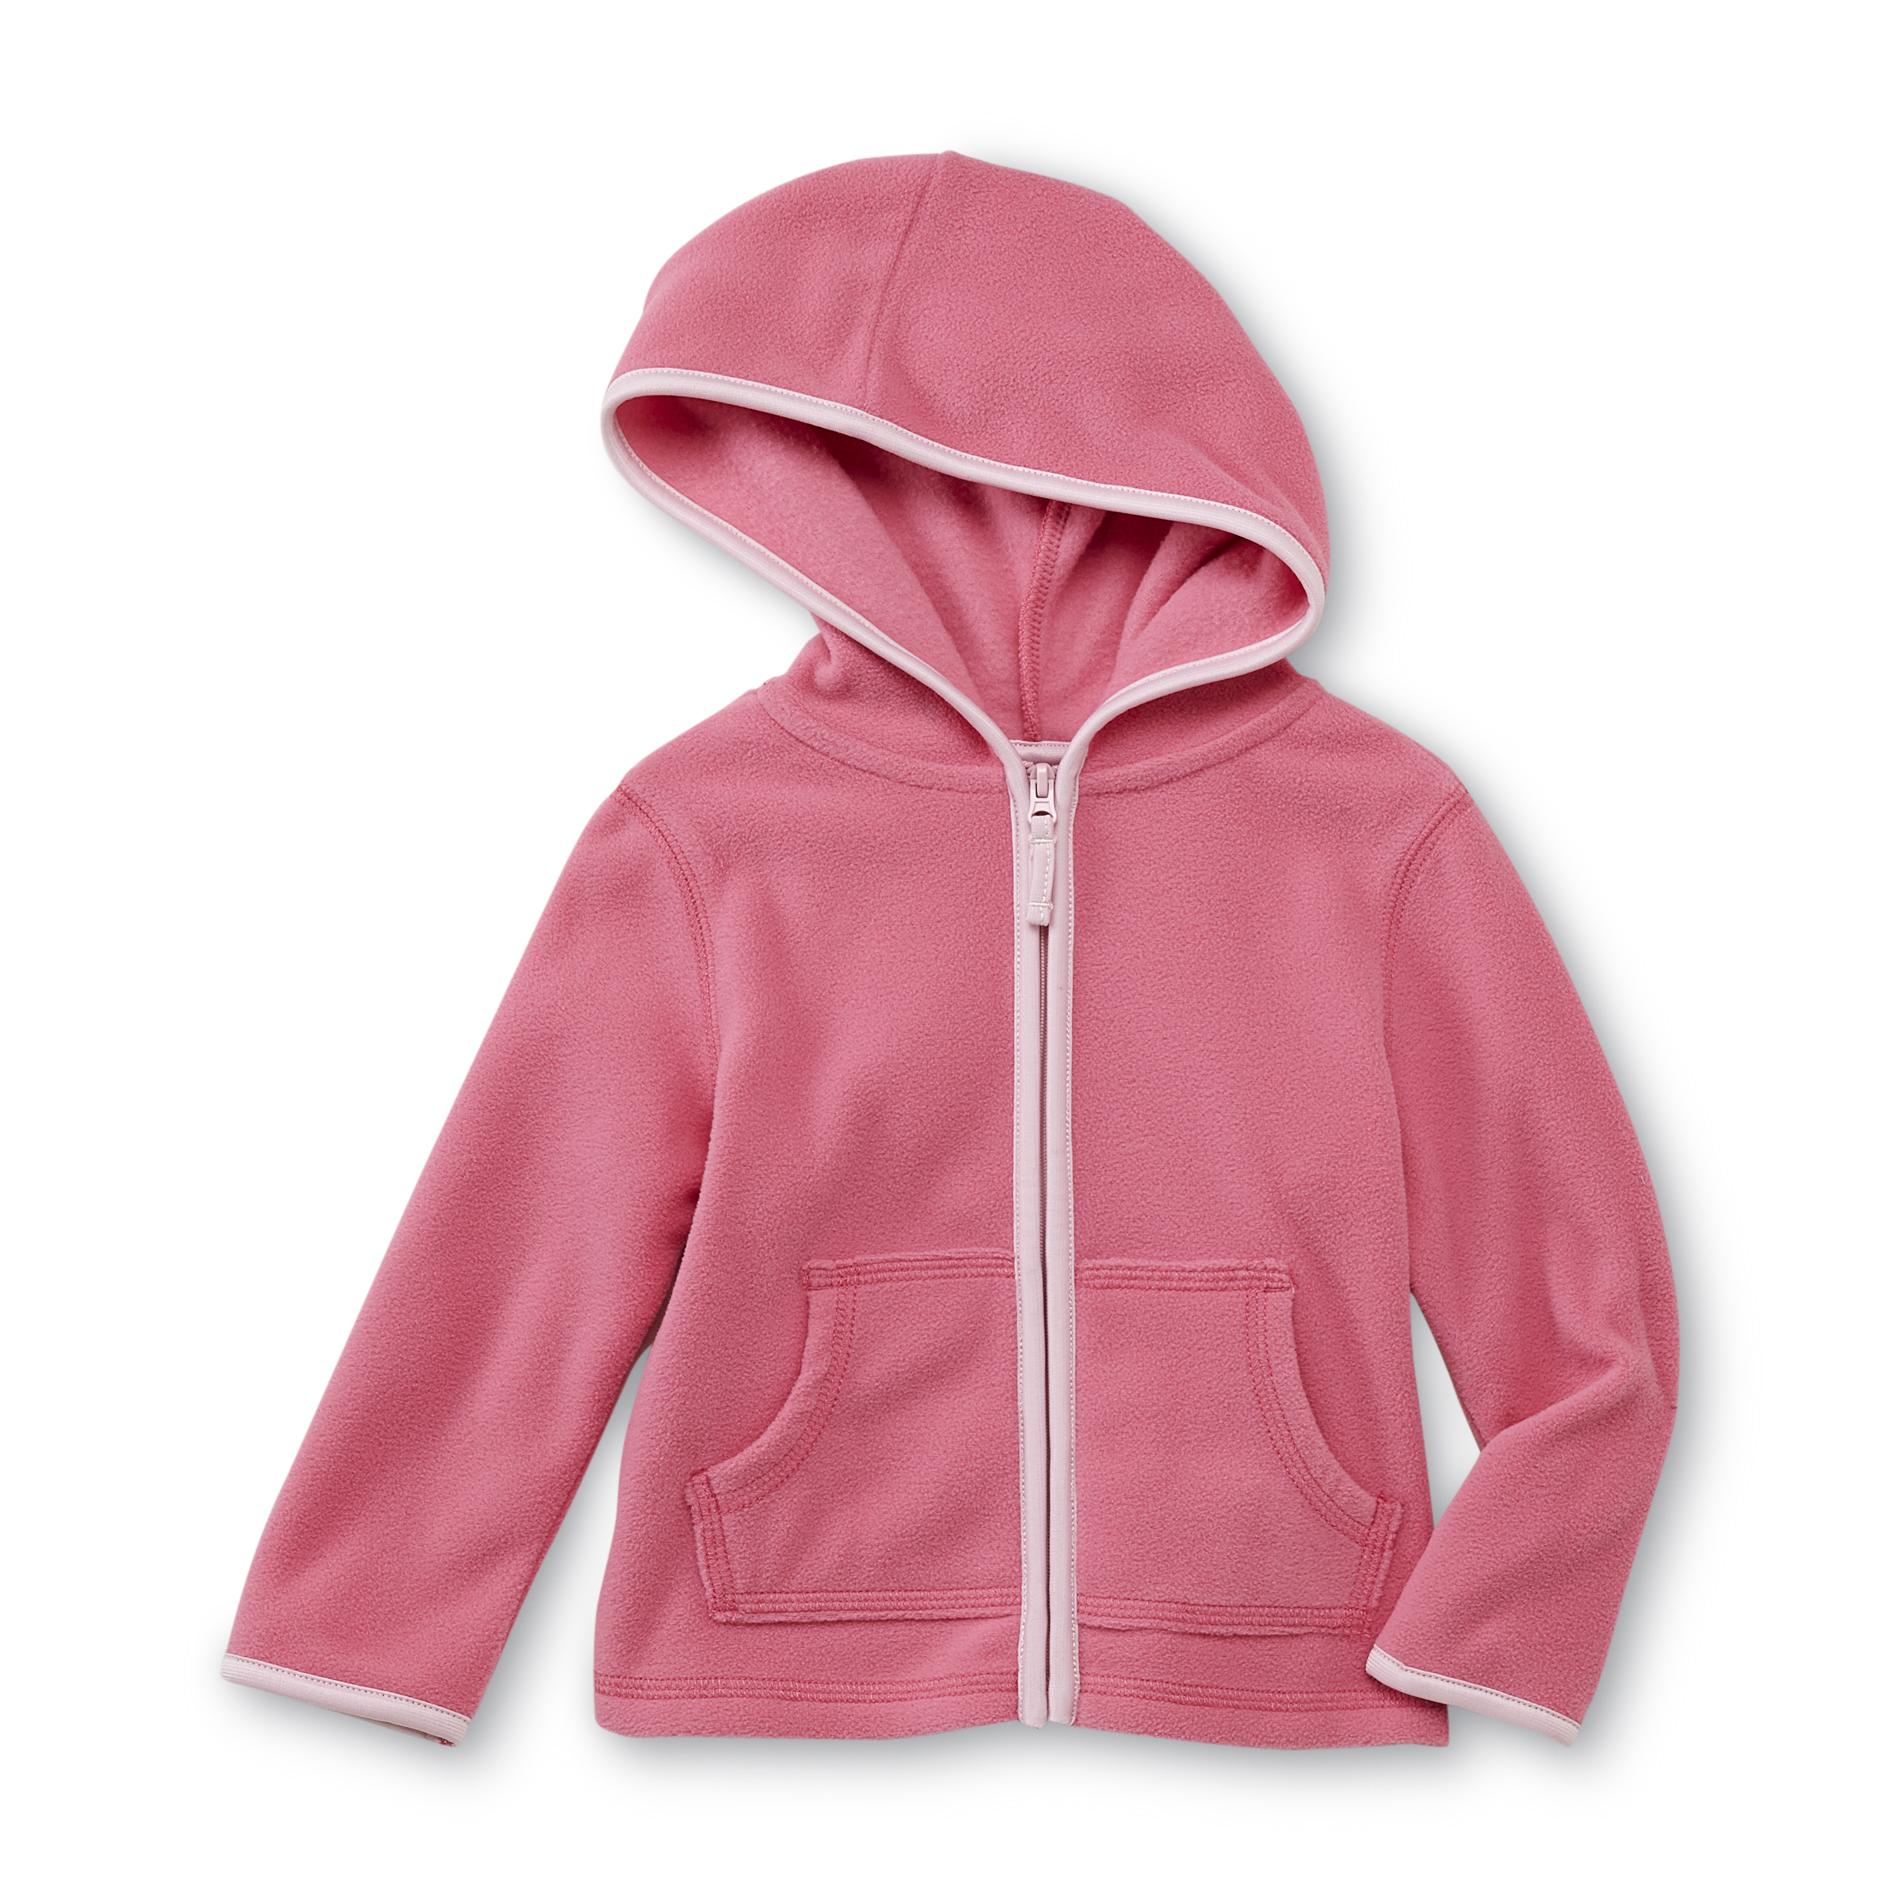 Toughskins Infant & Toddler Girl's Fleece Hoodie Jacket